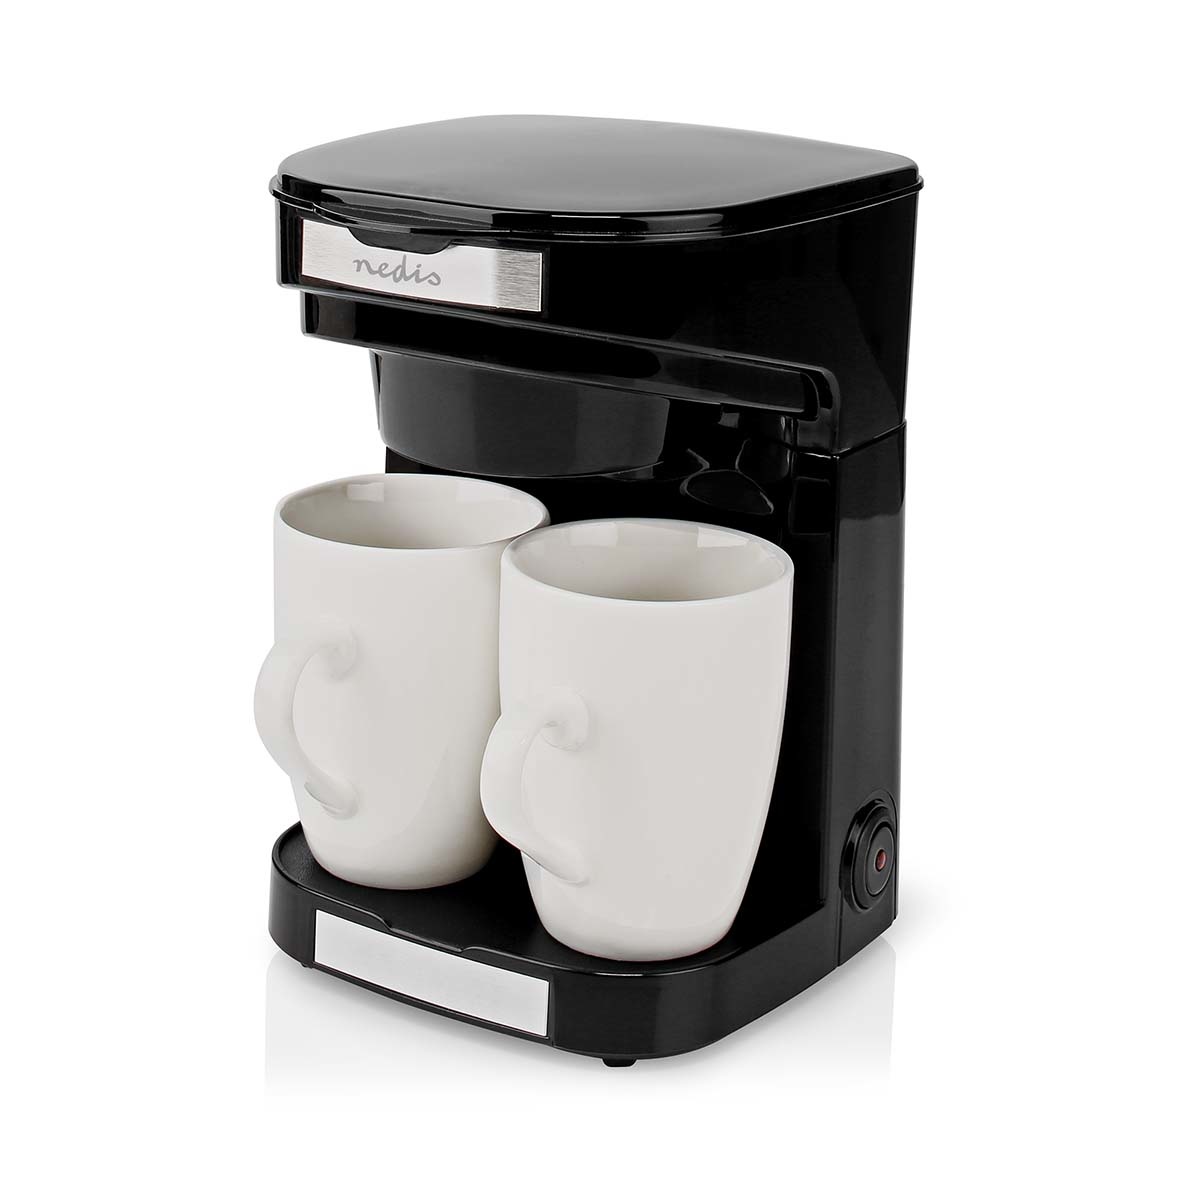 Uitsluiten afbreken omroeper Nedis KACM140EBK koffiezetapparaat met 2 kopjes | Maxtotaal! - Maxtotaal